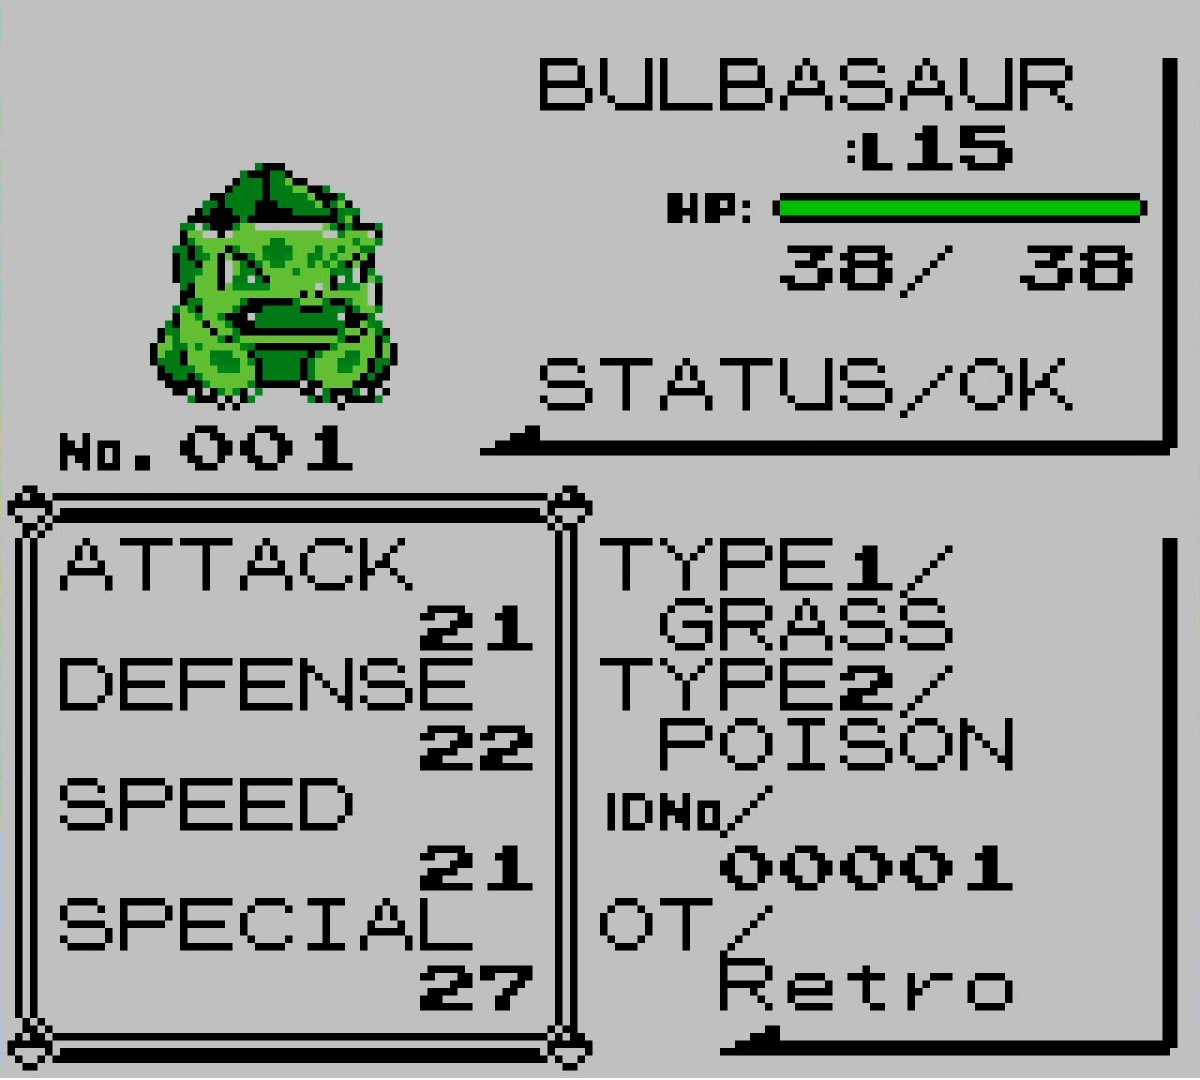 Pokemon Shiny Bulbasaur 13